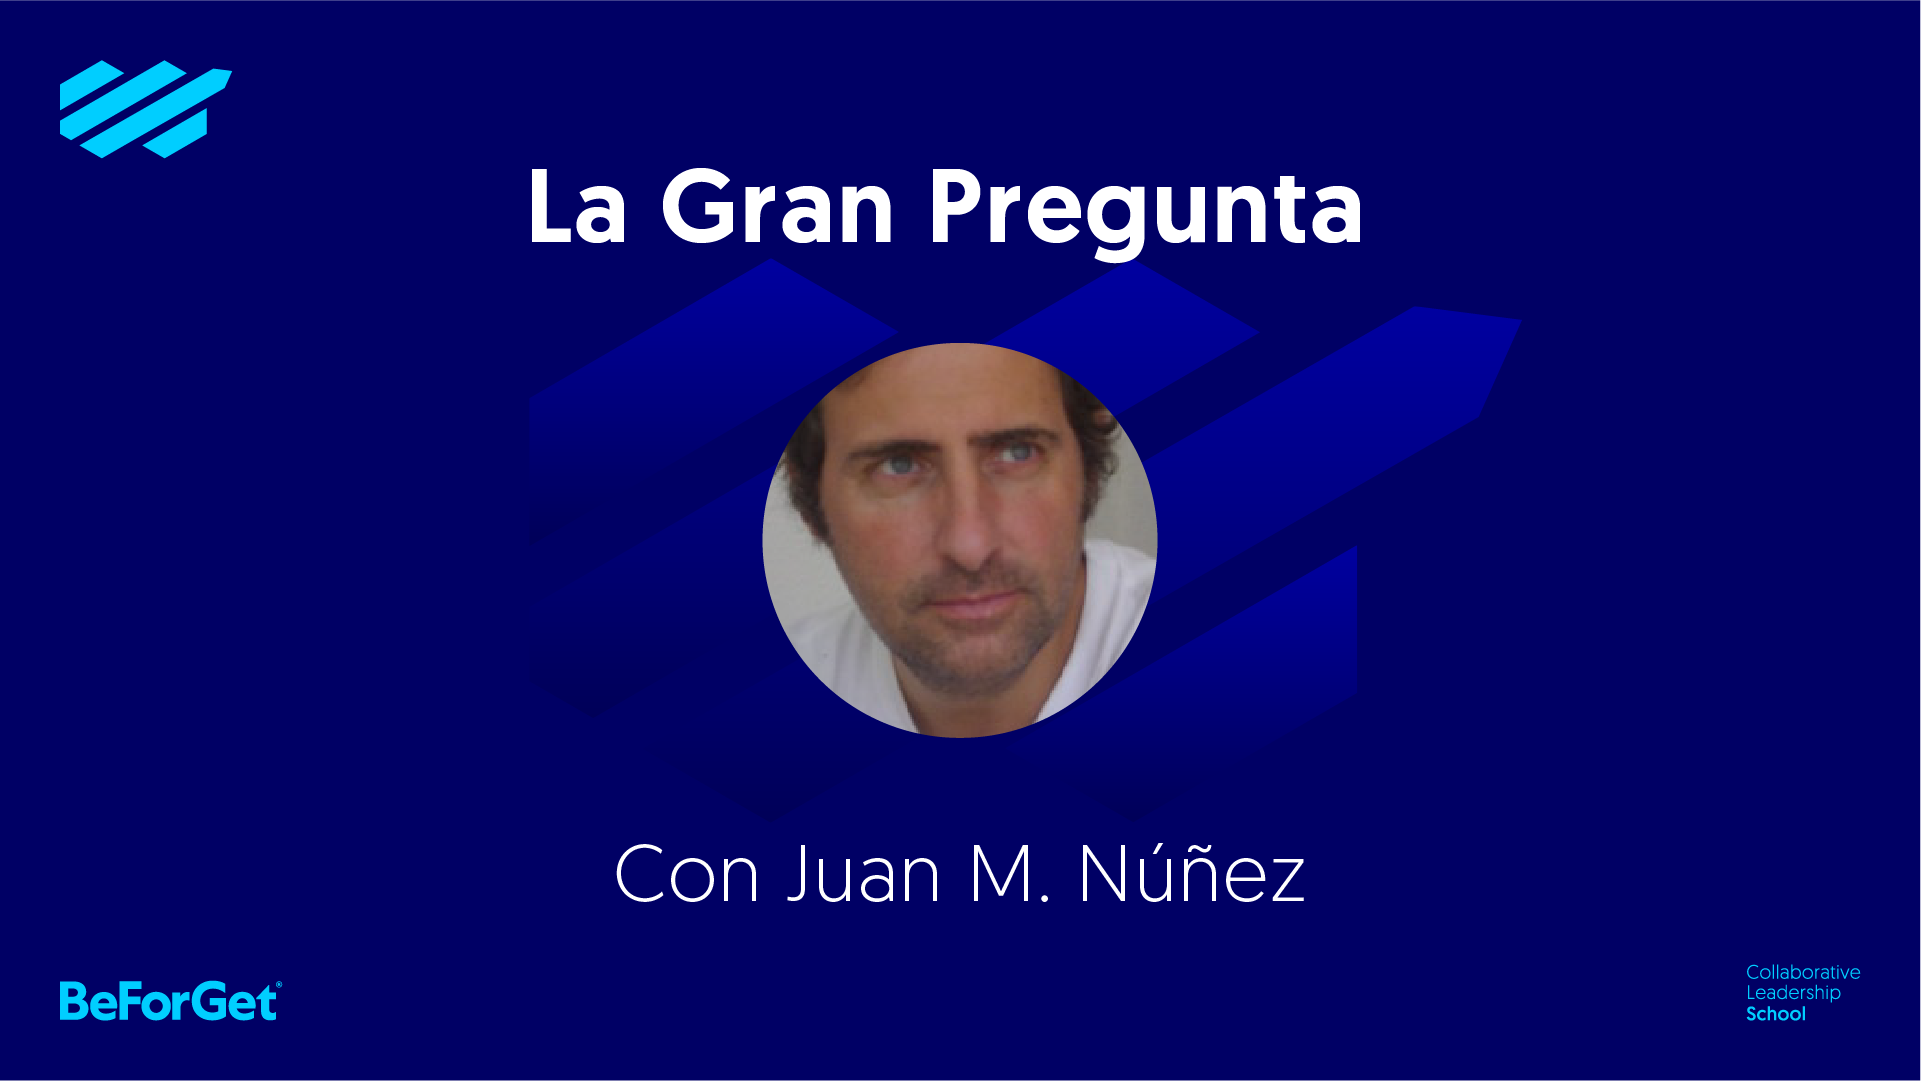 Juan M. Núñez_La Gran Pregunta Cover 16-9